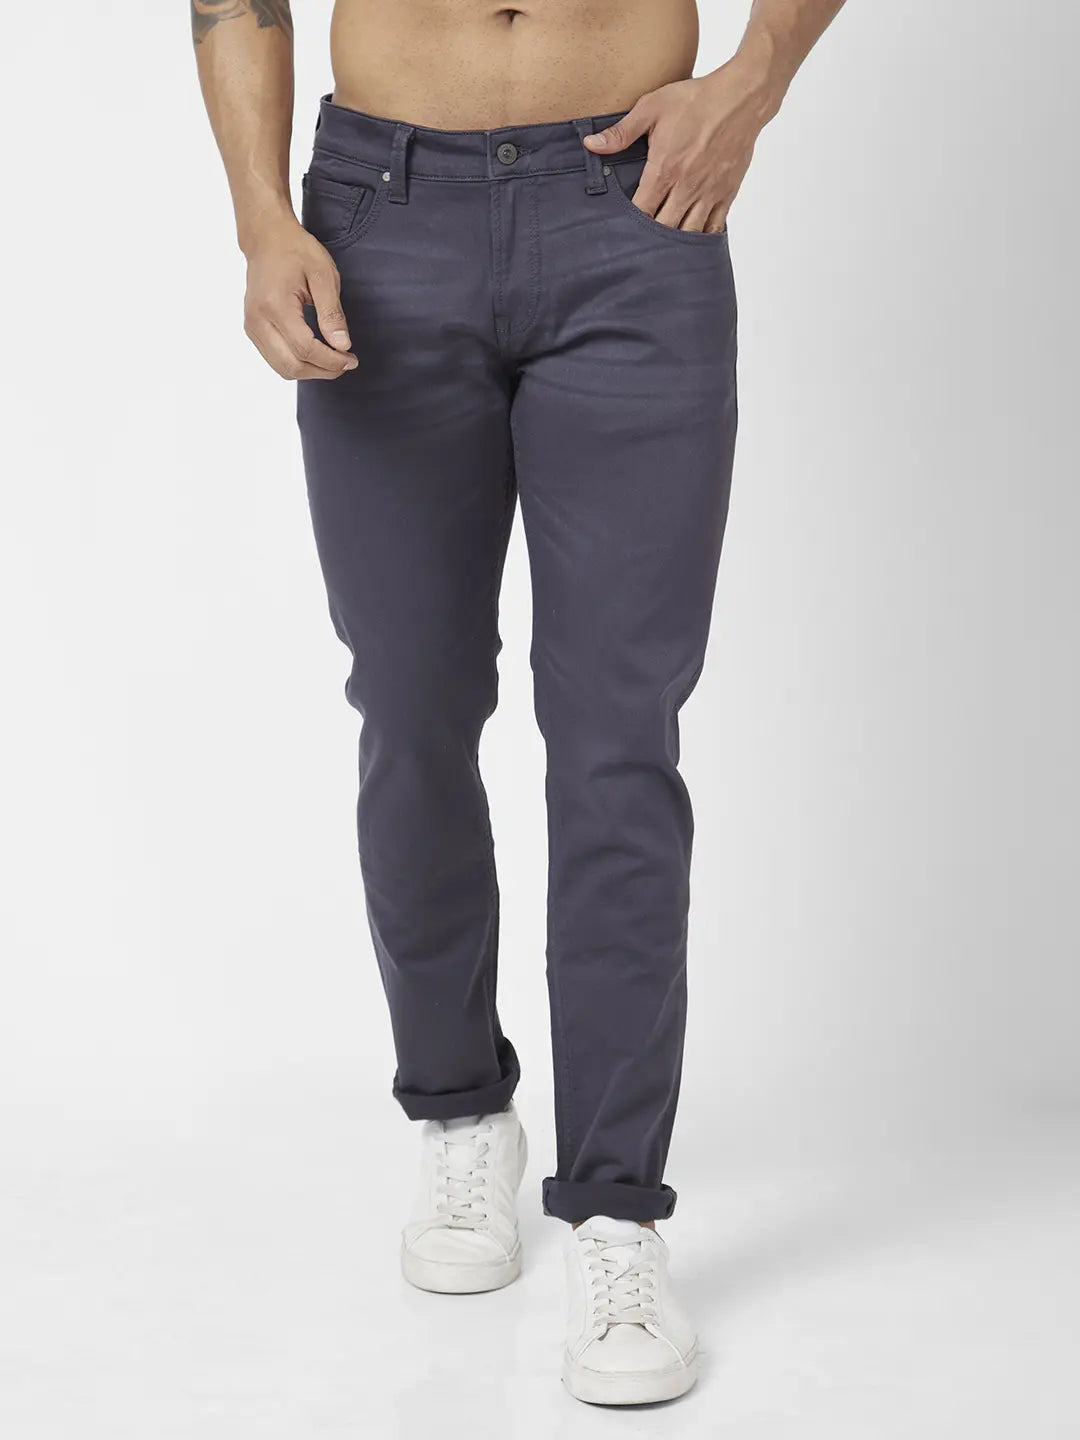 Spykar Men Dark Grey Cotton Stretch Regular Fit Narrow Length Clean Look Mid Rise Jeans (Rover)